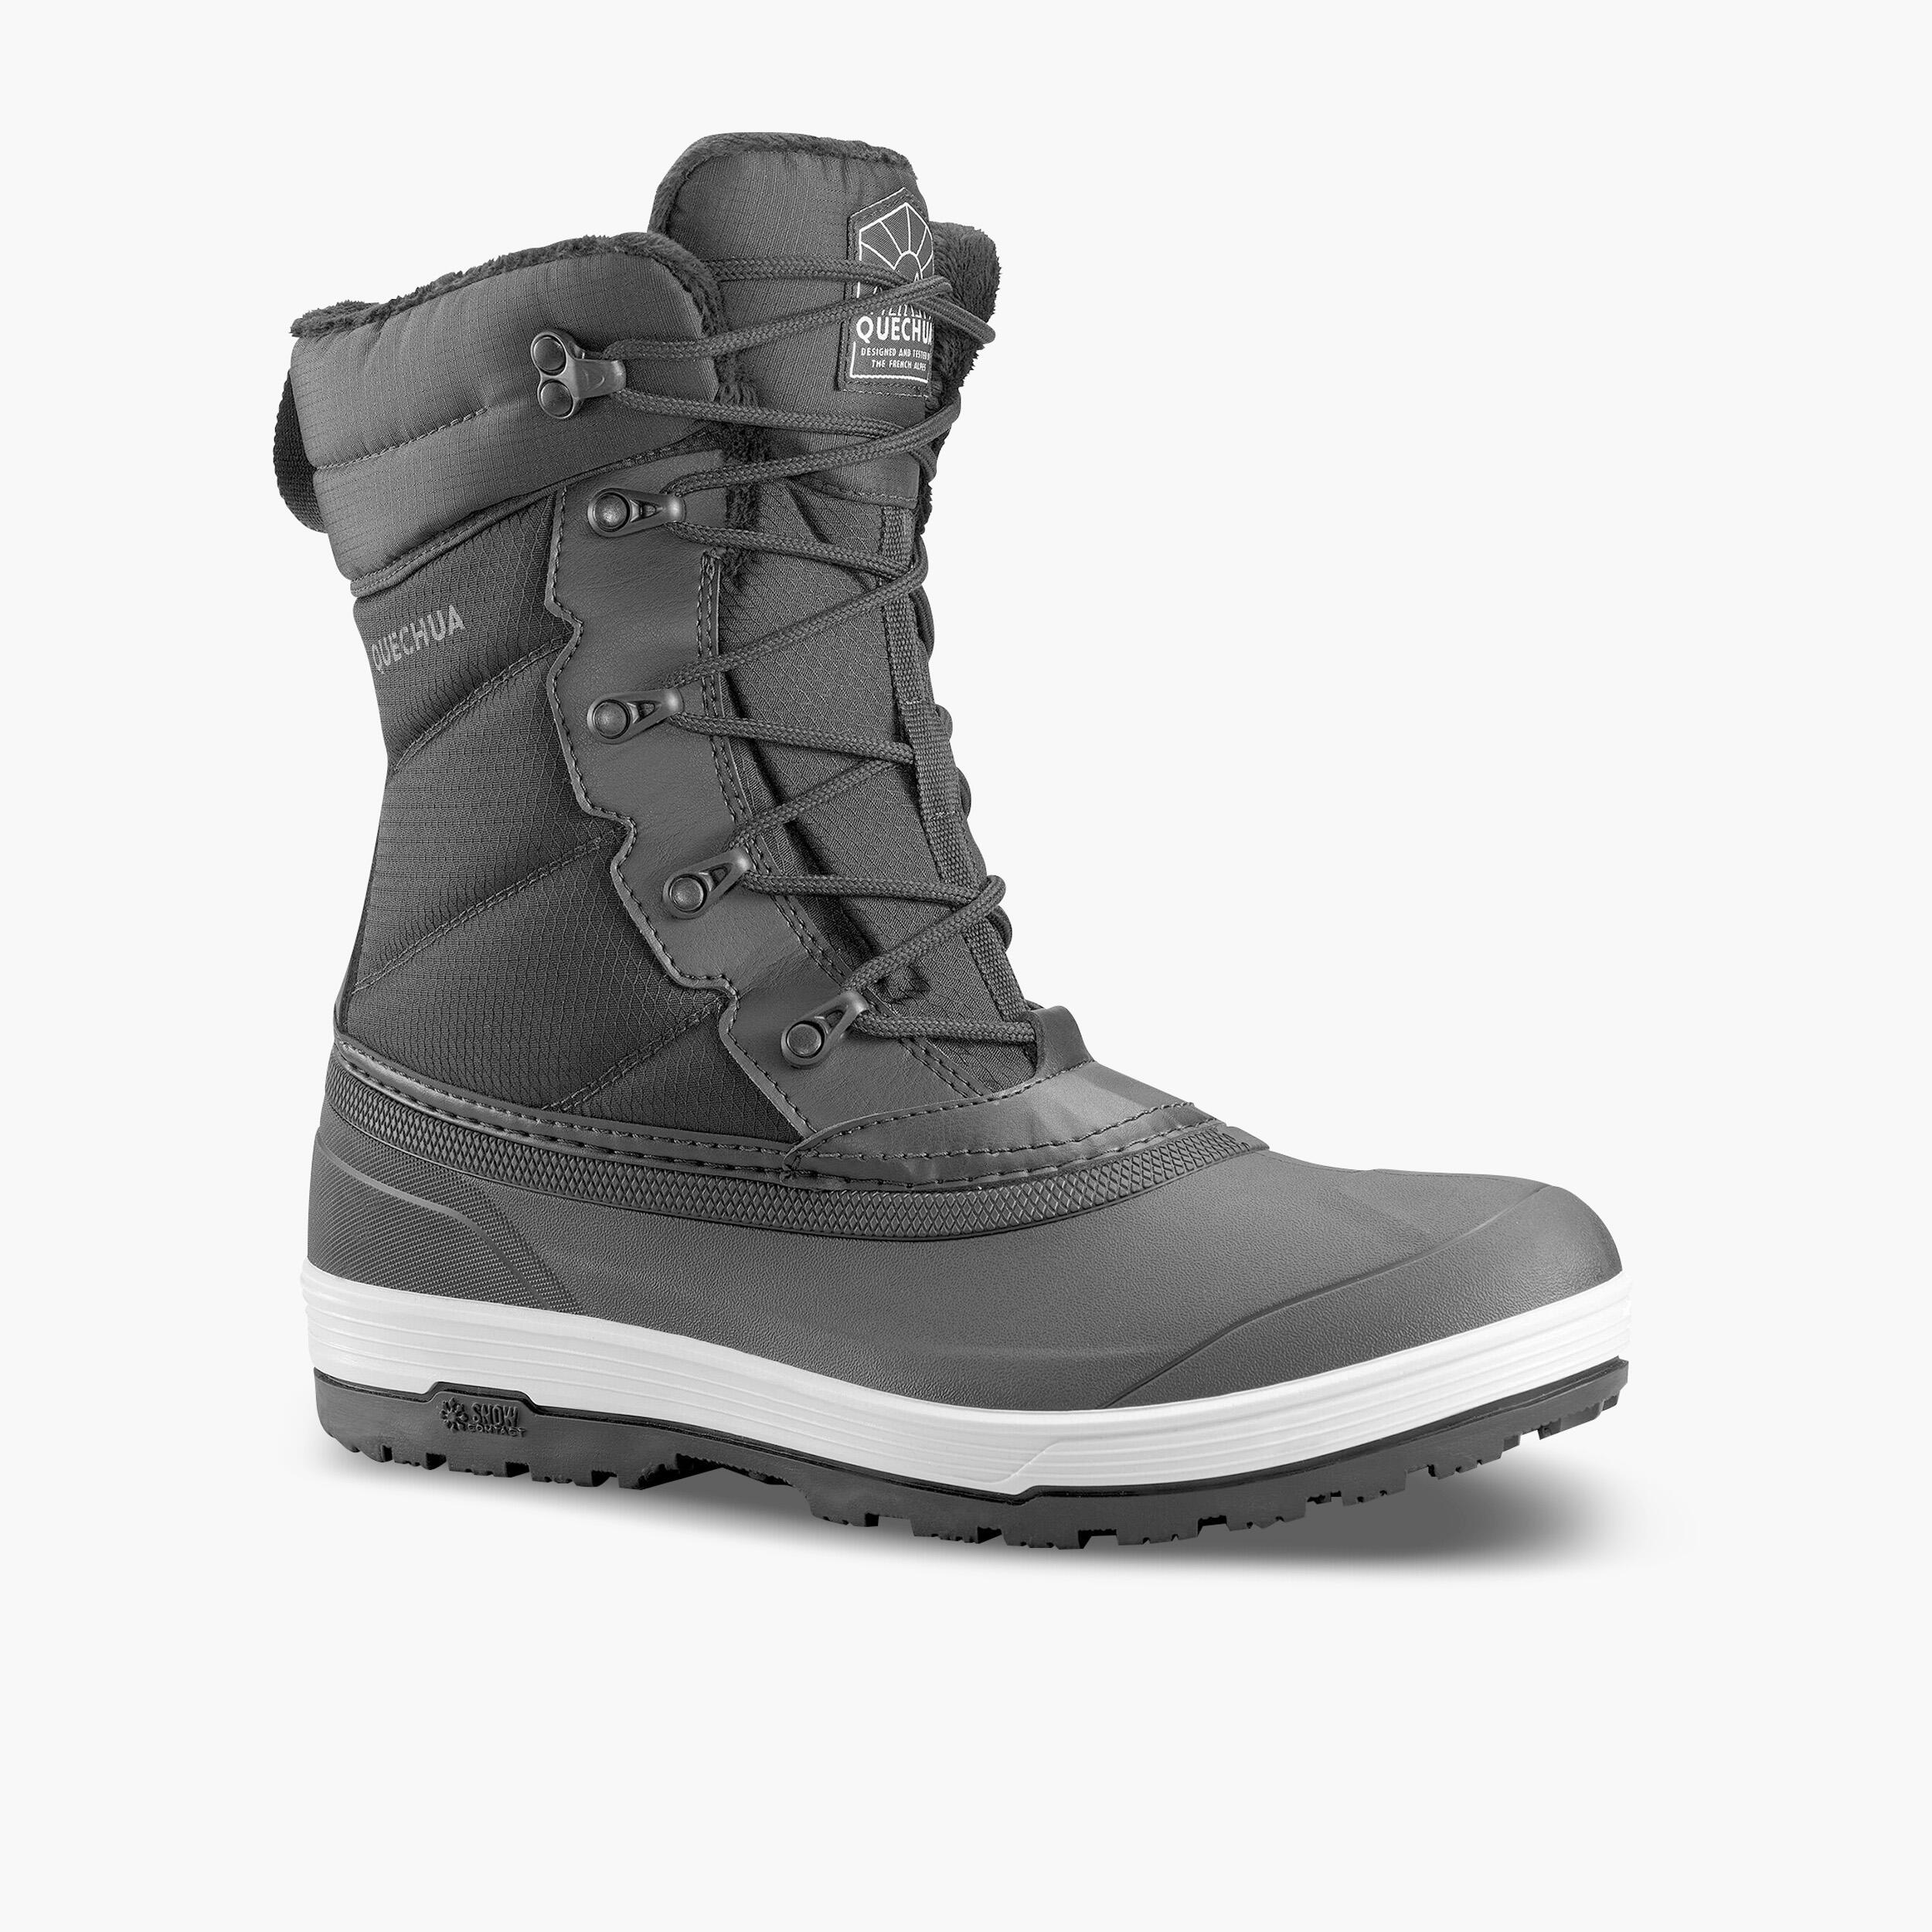 Warm Waterproof Snow Boots  - SH500 lace-up -  Men’s 1/8